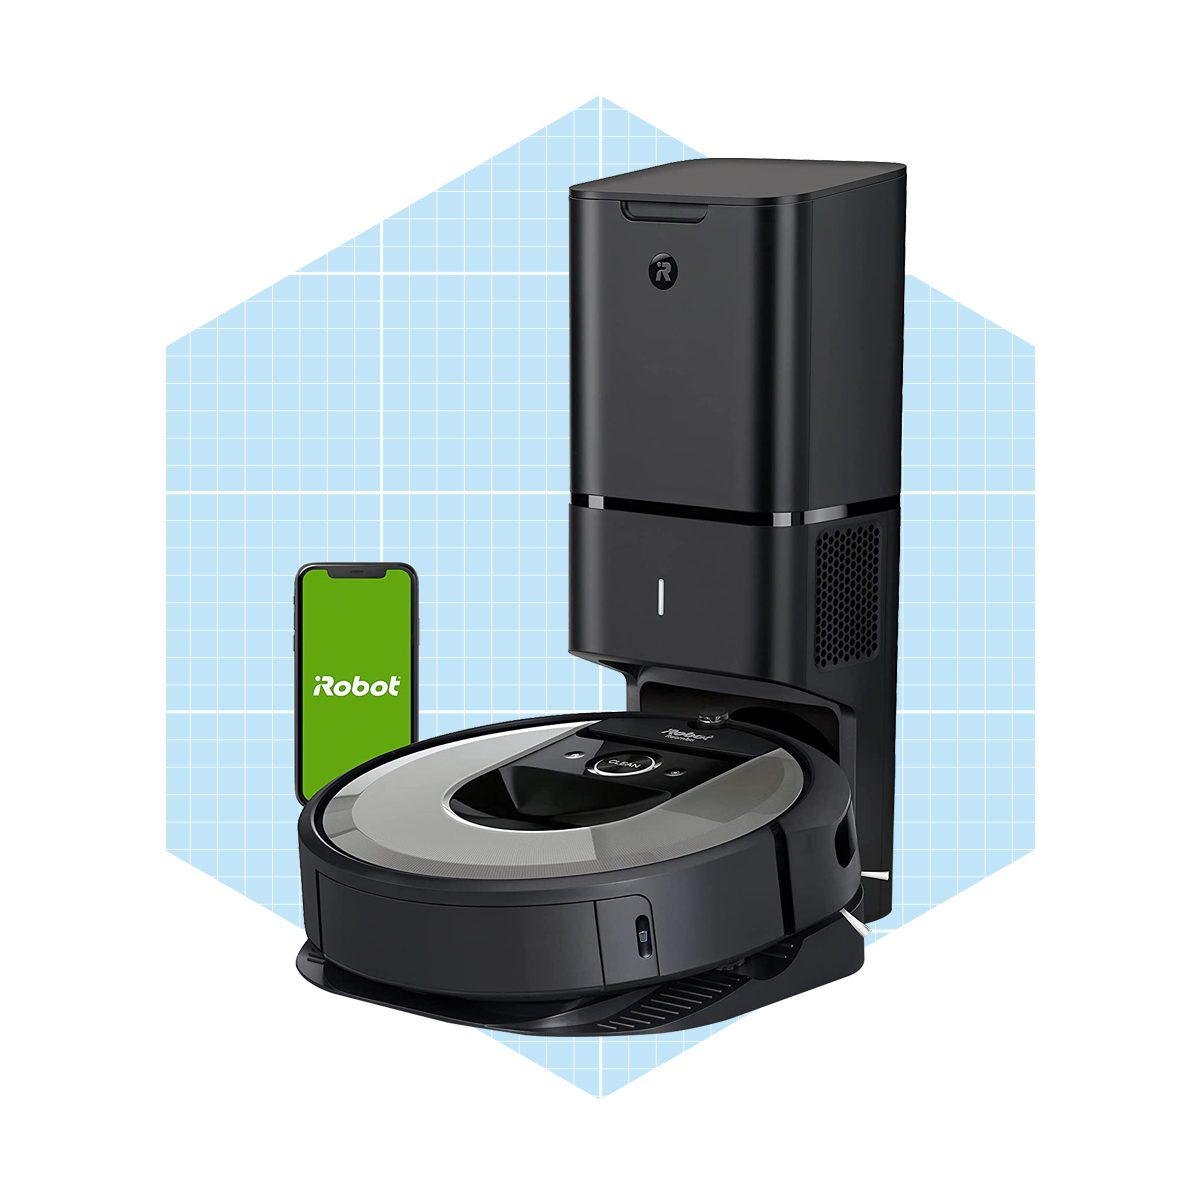 Irobot Roomba I6+ Robot Vacuum With Automatic Dirt Disposal Empties Itself Ecomm Amazon.com